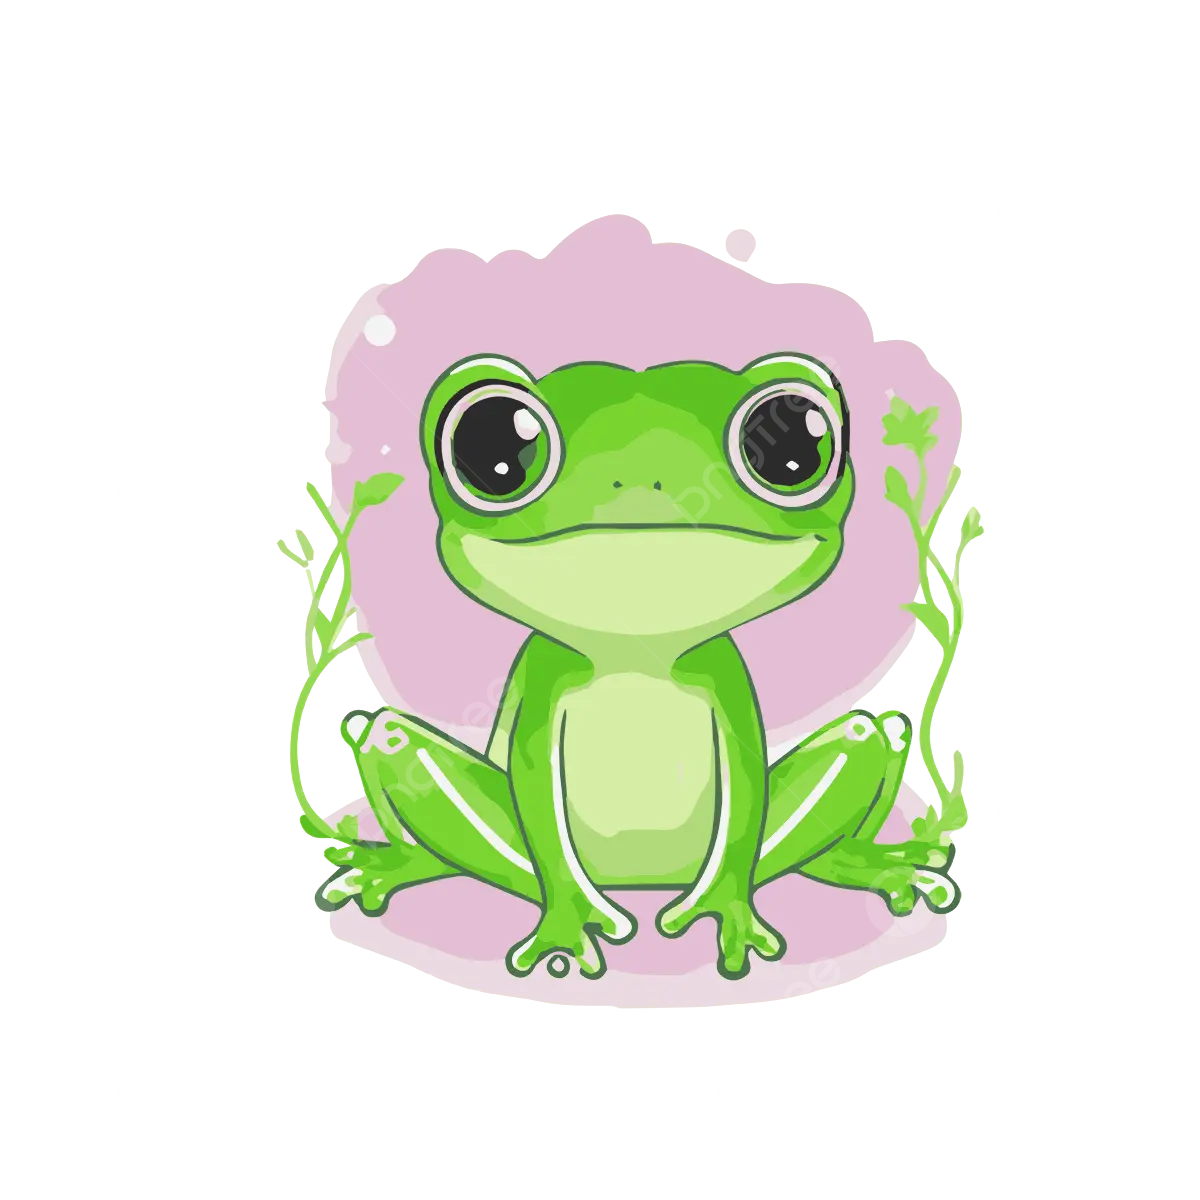 Cute Frog PNG Image File